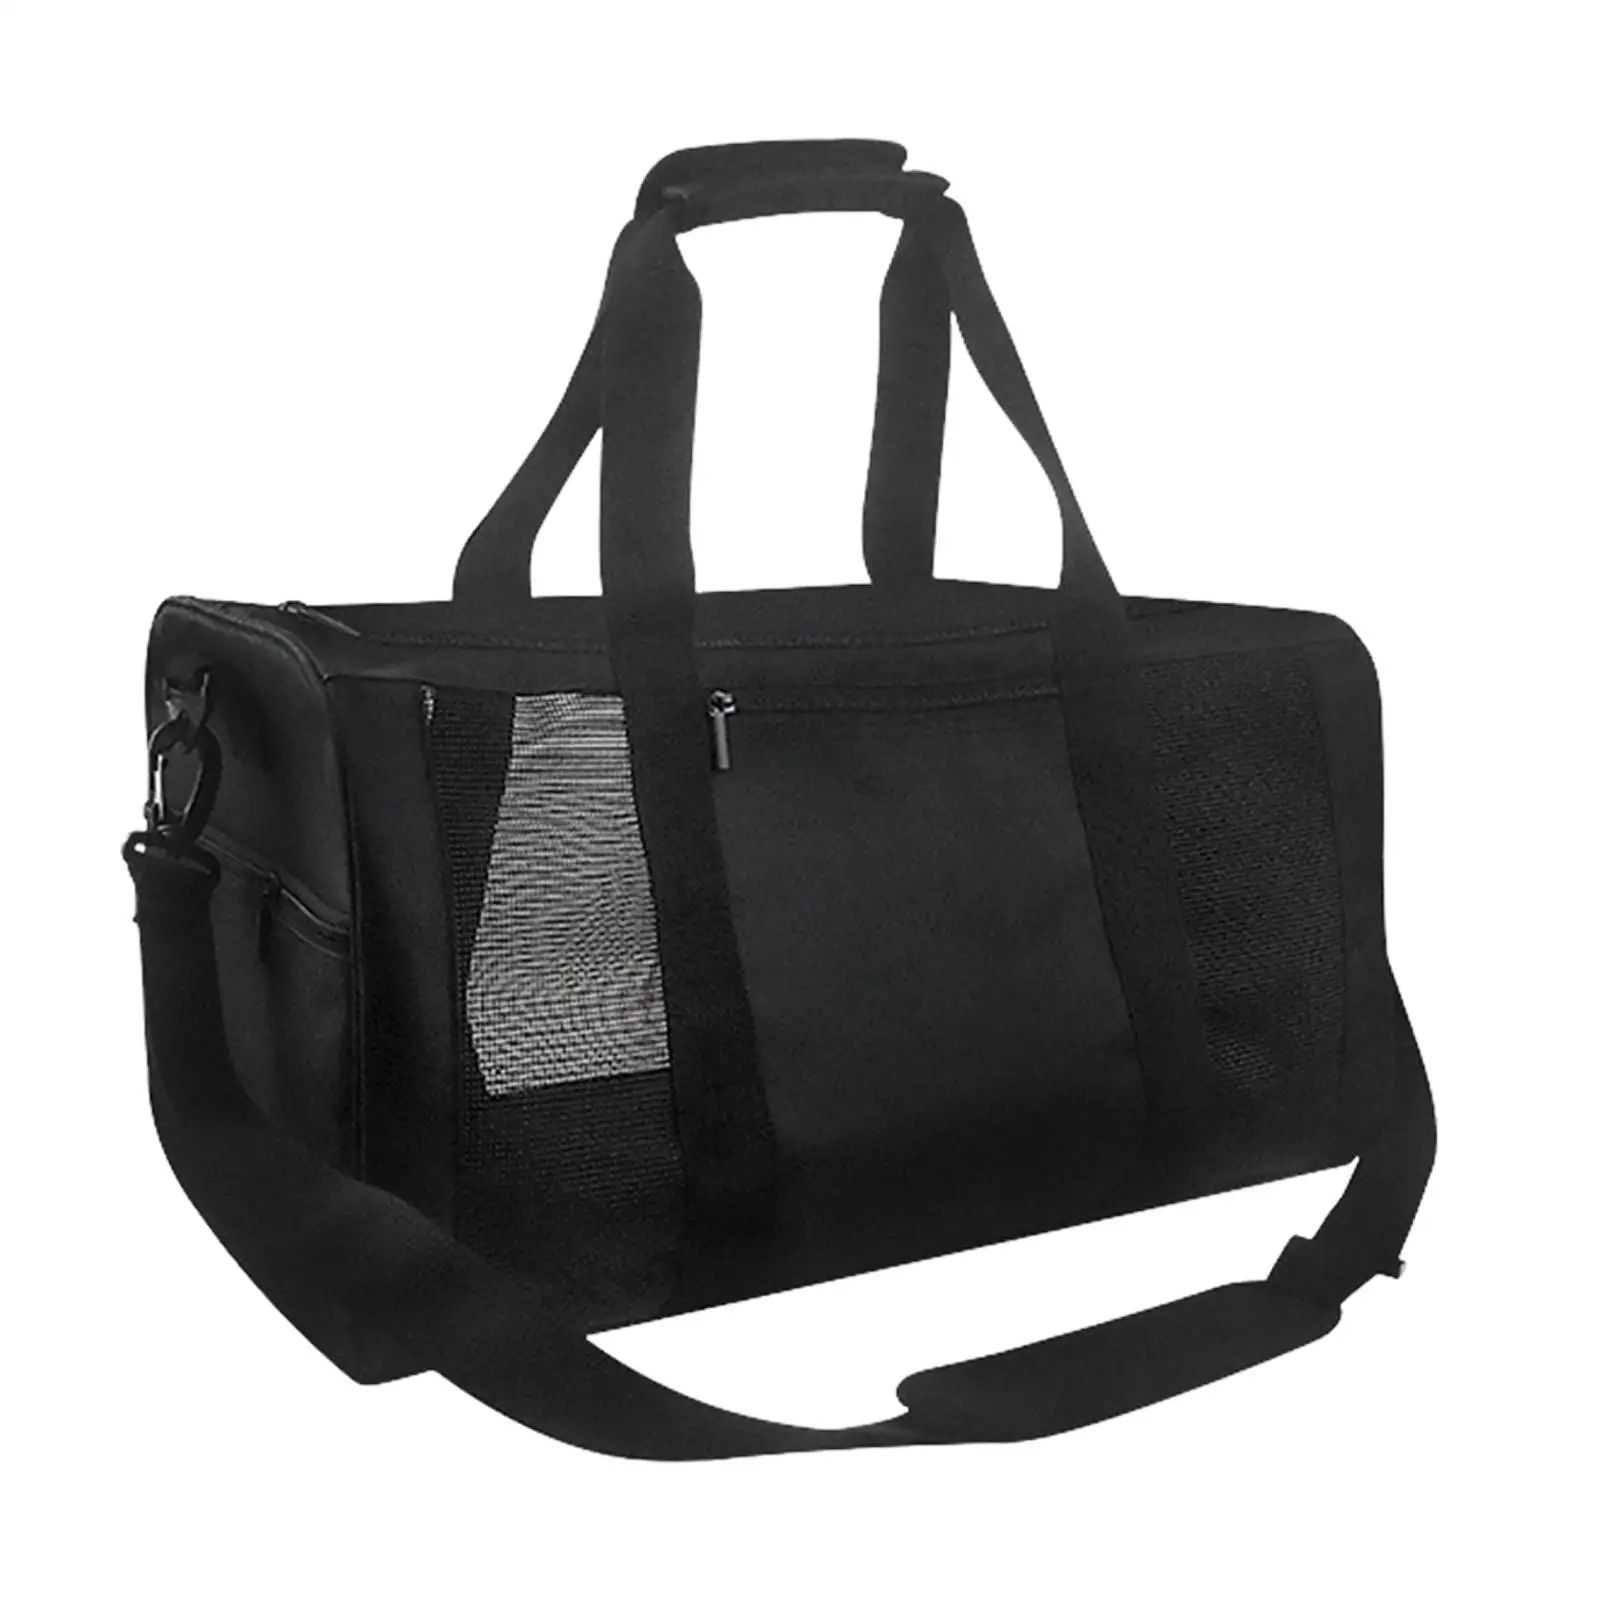 Mesh Gym Bag Travel Detachable Strap Travel Duffle Bag Overnight Weekender Bag Zipper Closure Hiking Sports Gym Bag Exercise Bag